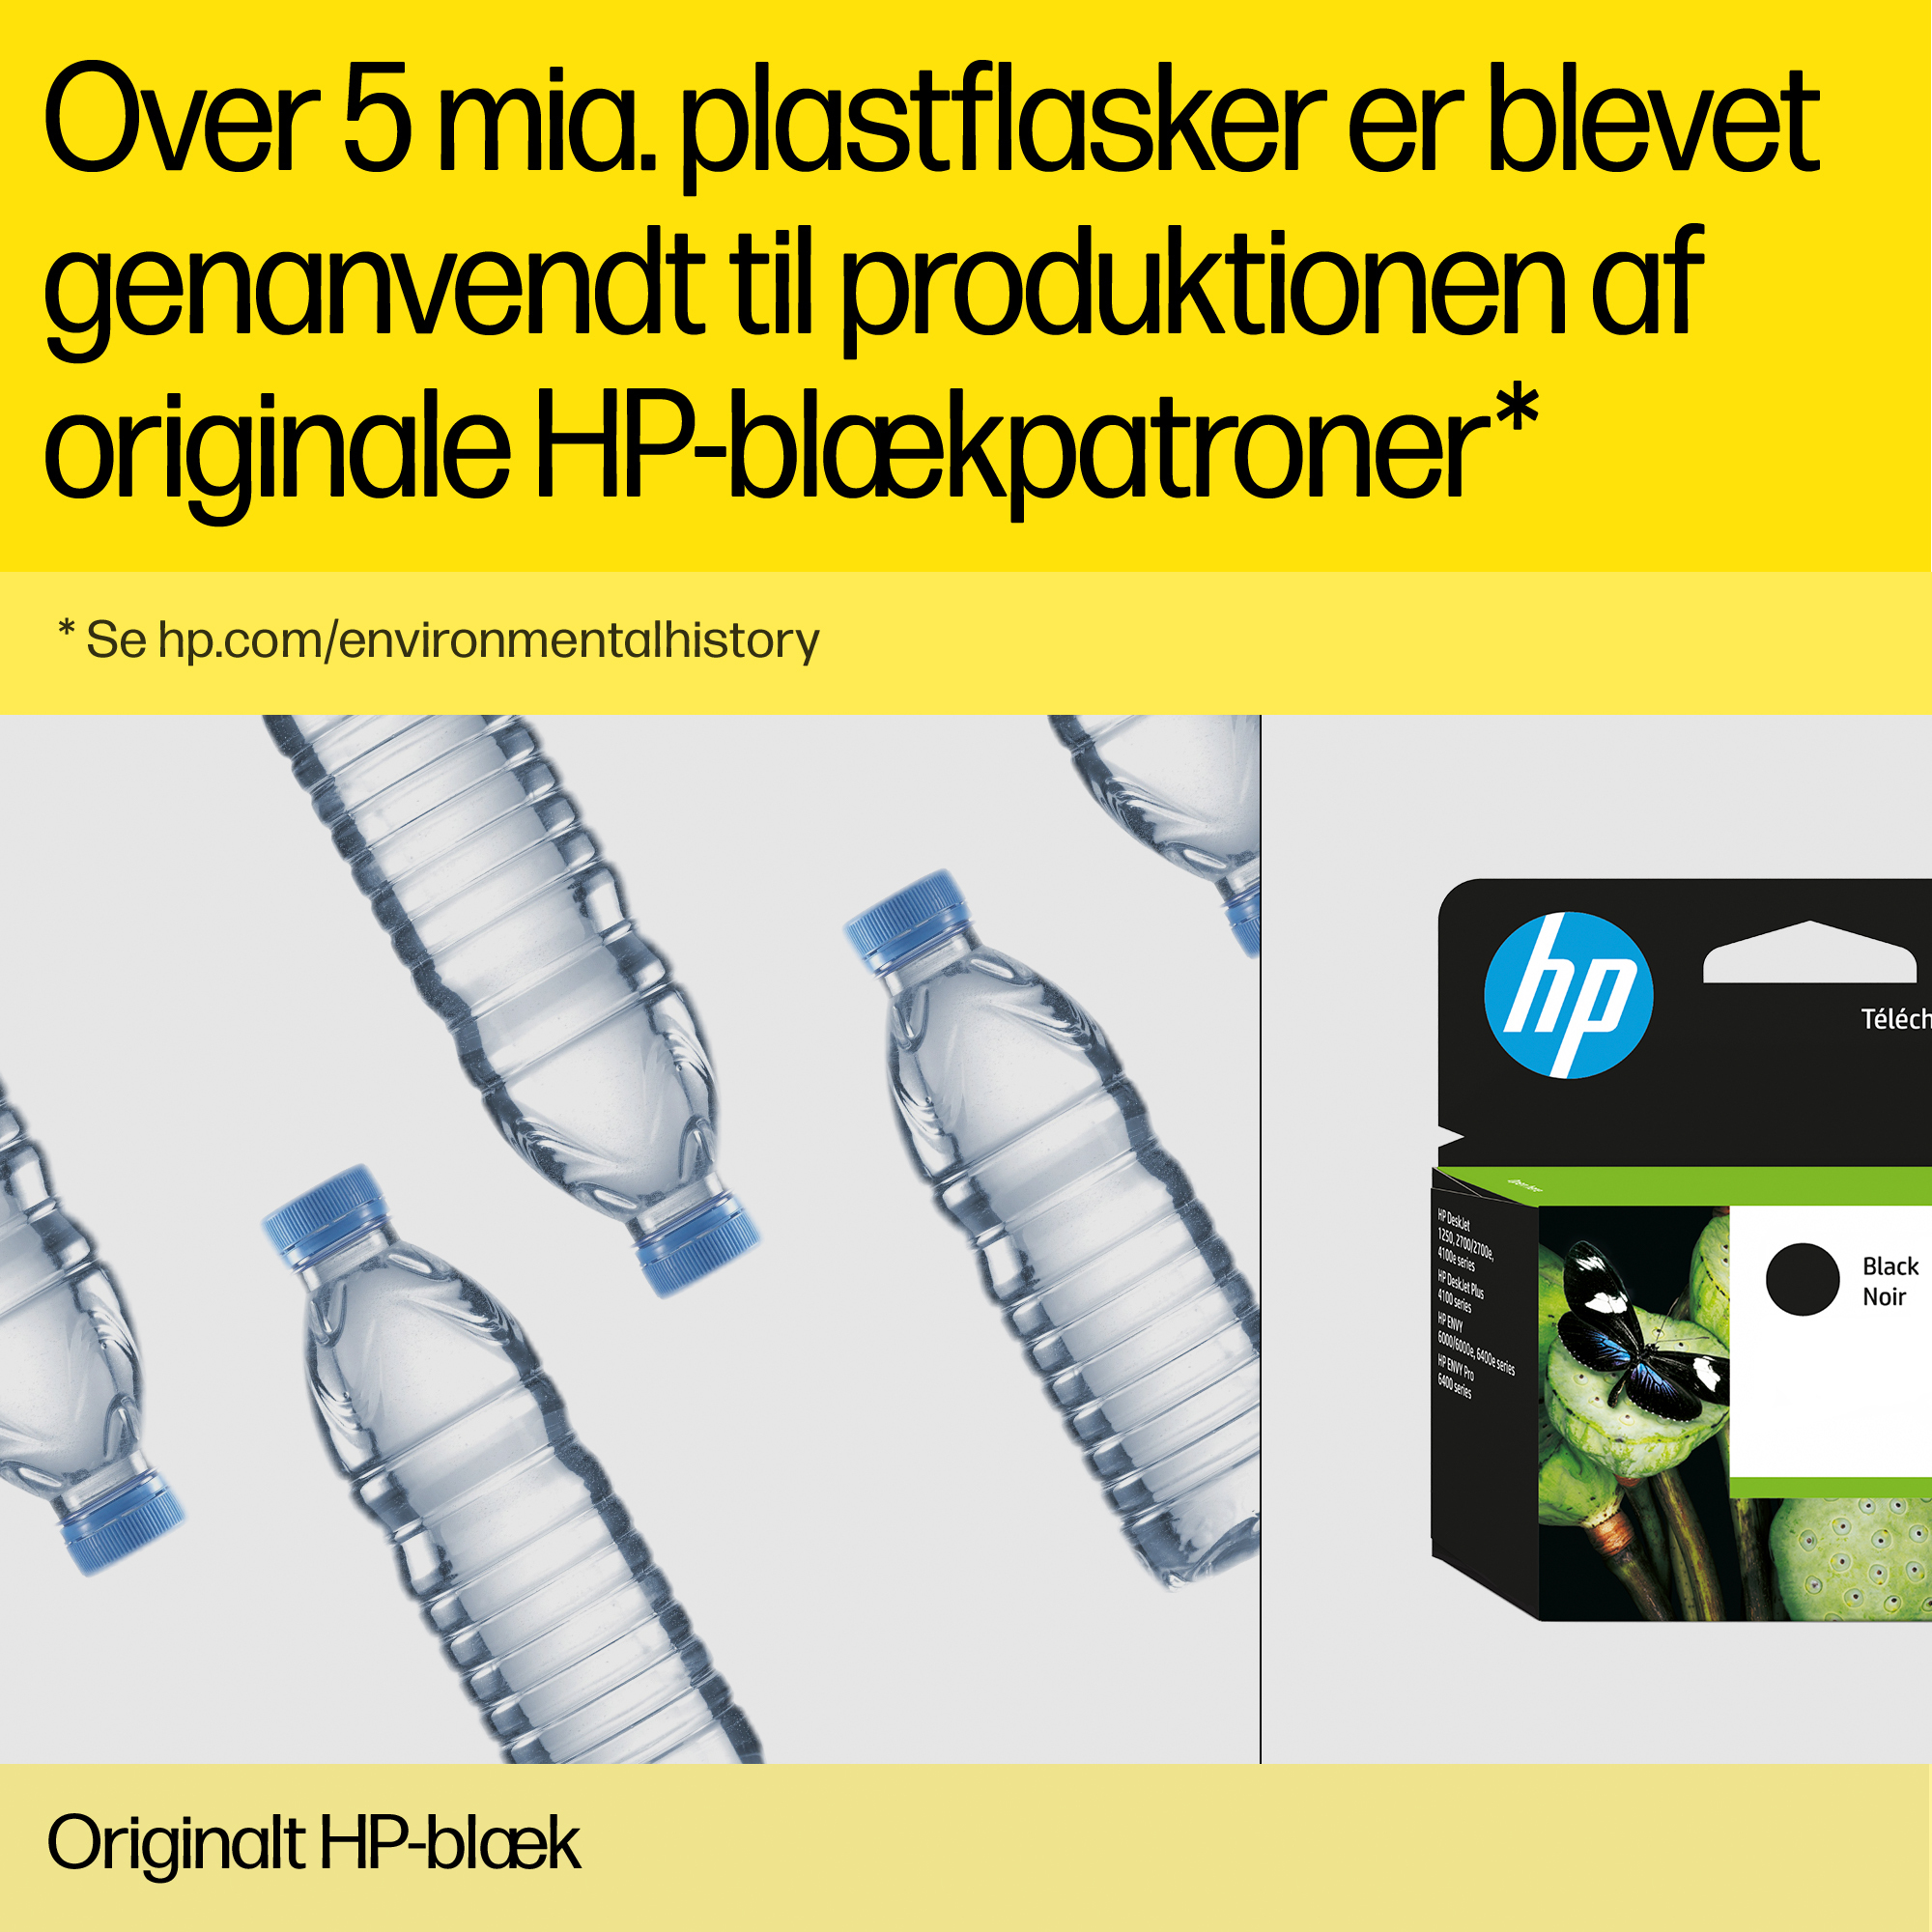 HP 91 - 775 ml - Magenta - Original - Tintenpatrone